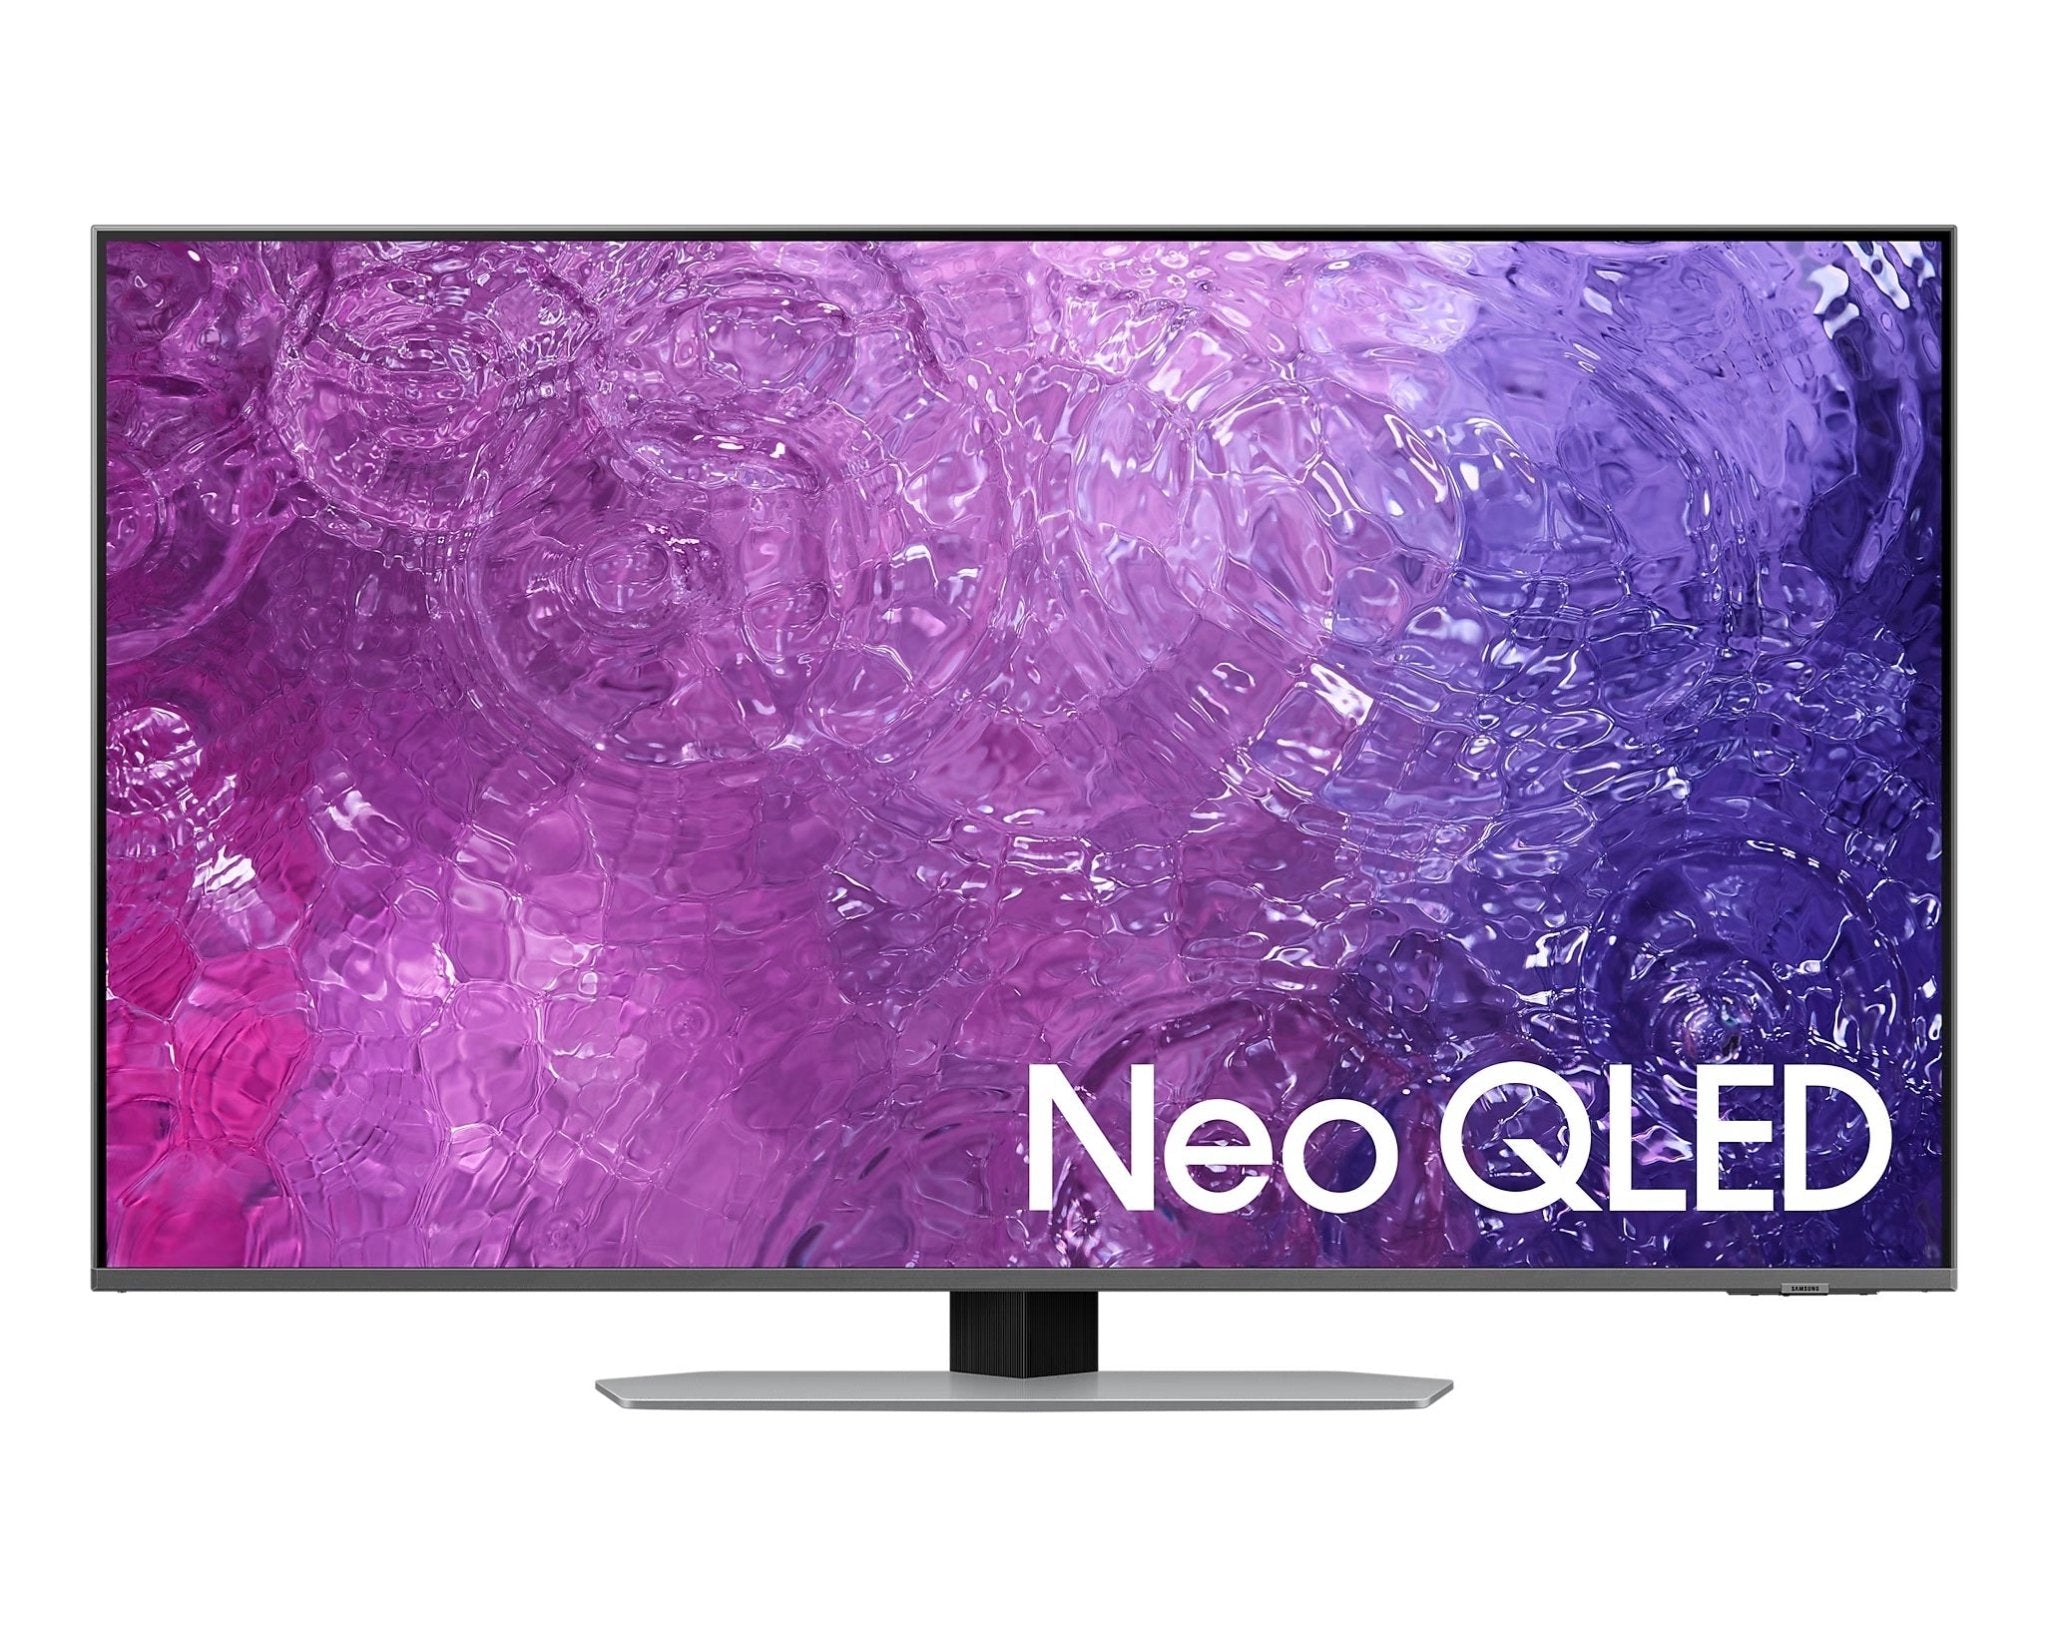 Samsung 三星 QN90C 系列 4K Neo QLED 電視 - Fever Electrics 電器熱網購平台